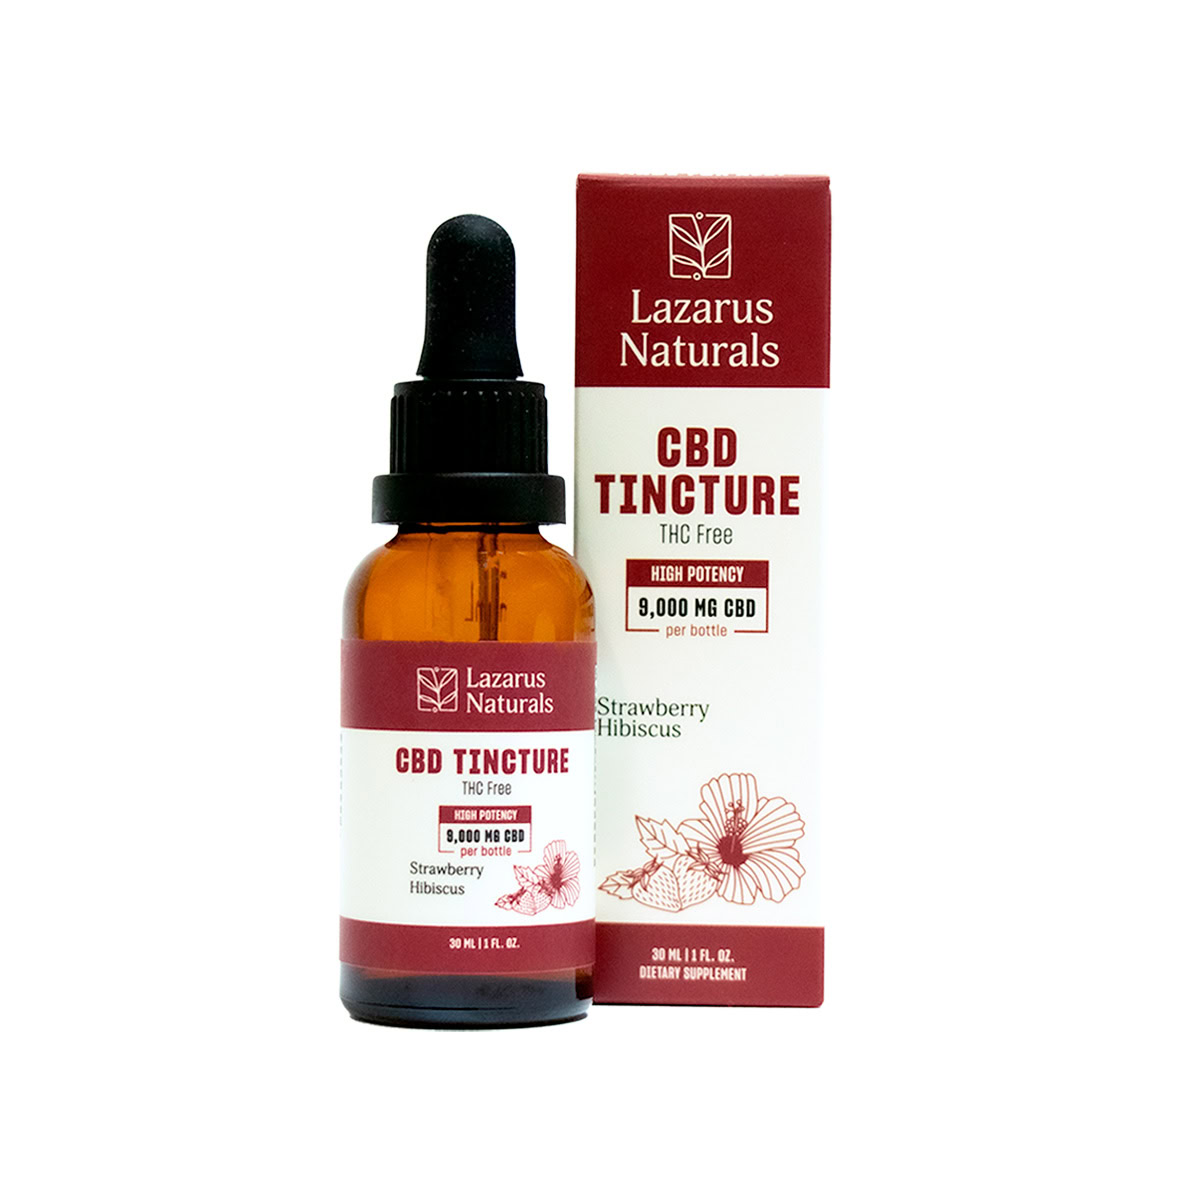 Lazarus Naturals, High Potency CBD Tincture, Strawberry Hibiscus, Isolate THC-Free, 1fl oz, 9000mg CBD